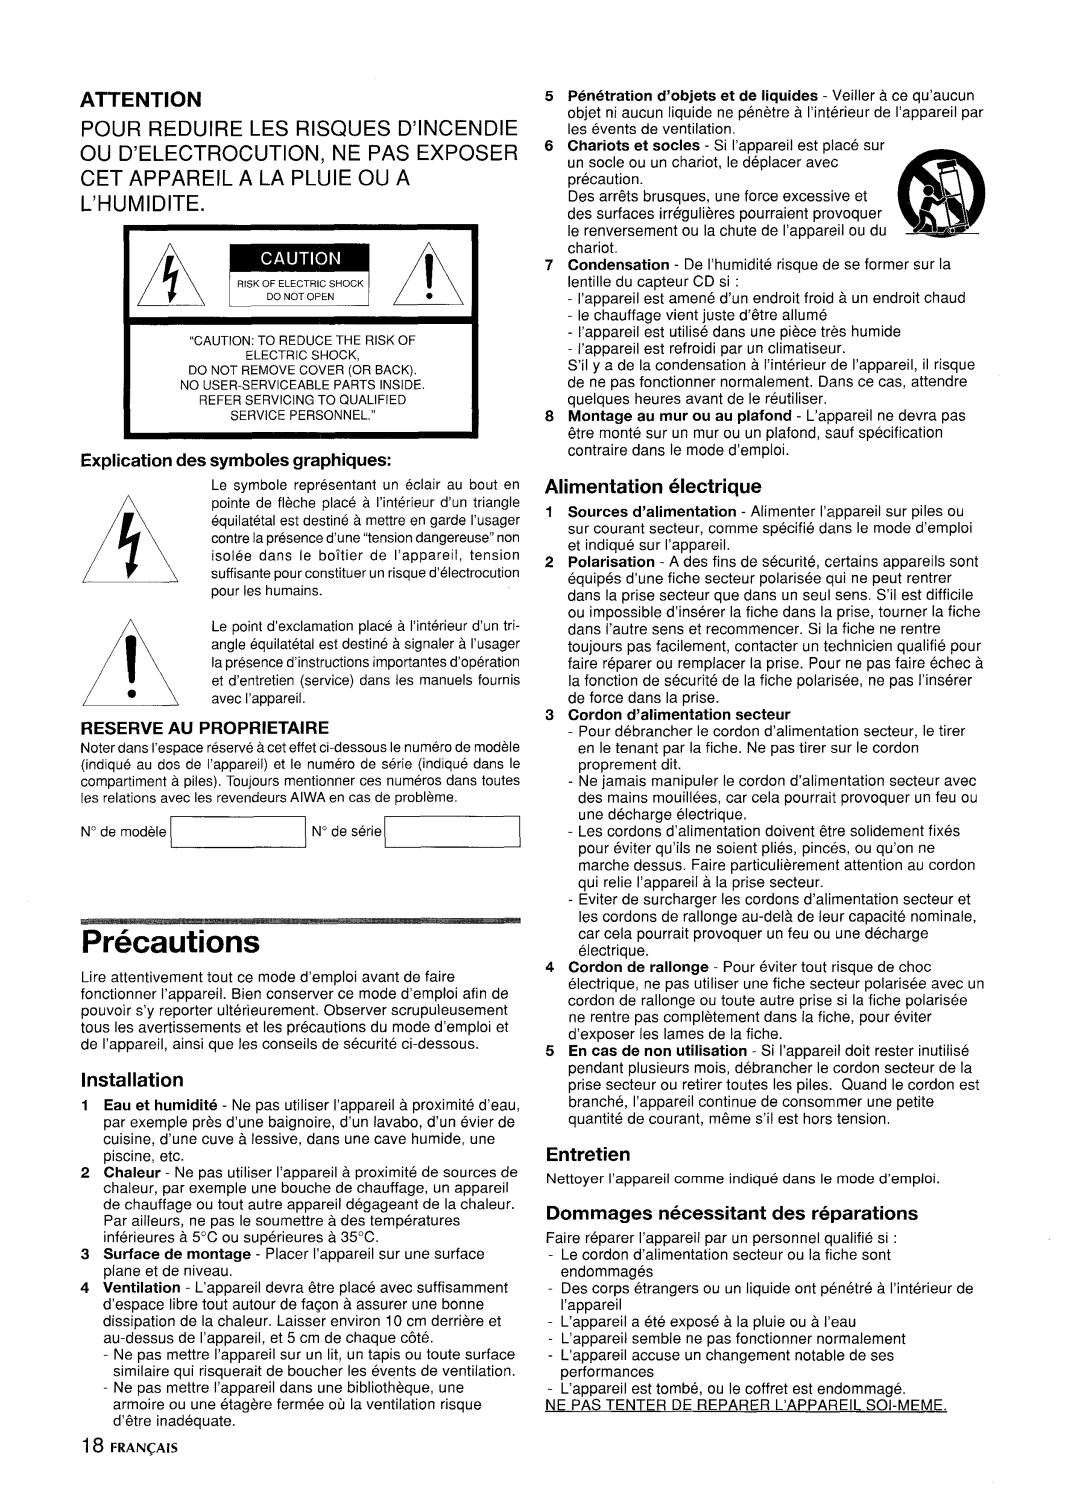 Aiwa CSD-ED67, CSD-ED 37, CSD-ED 57 manual ‘OdemOde’e~NOdeserie~, 1AEs, Precautions 